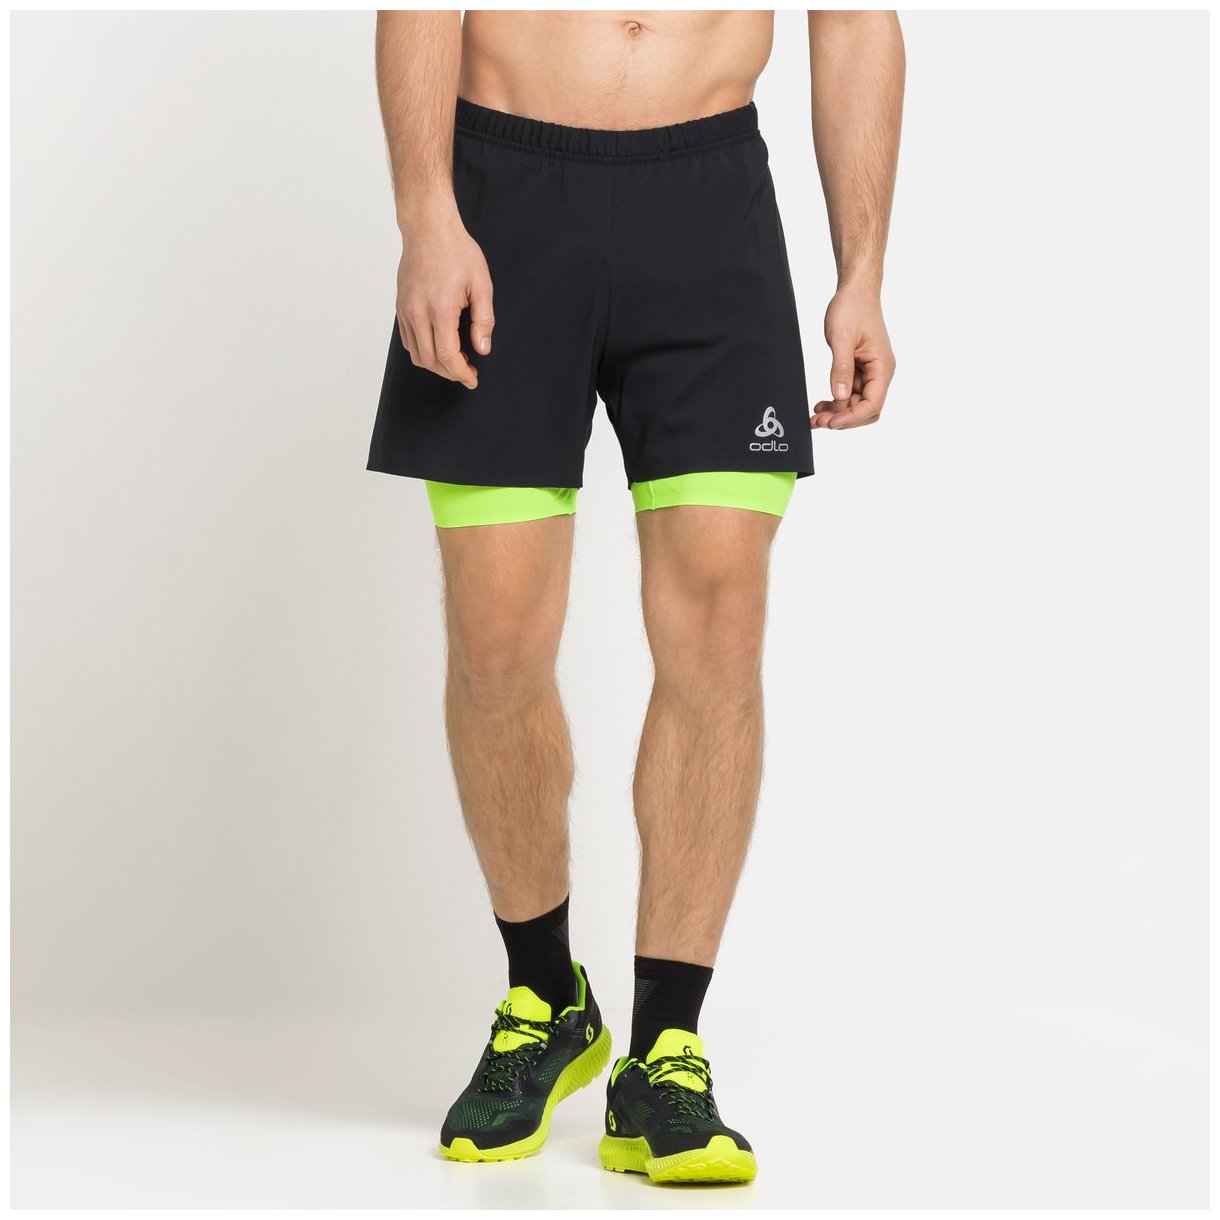 Men's ACTIVE SPORT 5 INCH Liner Running Shorts underwear odlo sale – Ski  Exchange